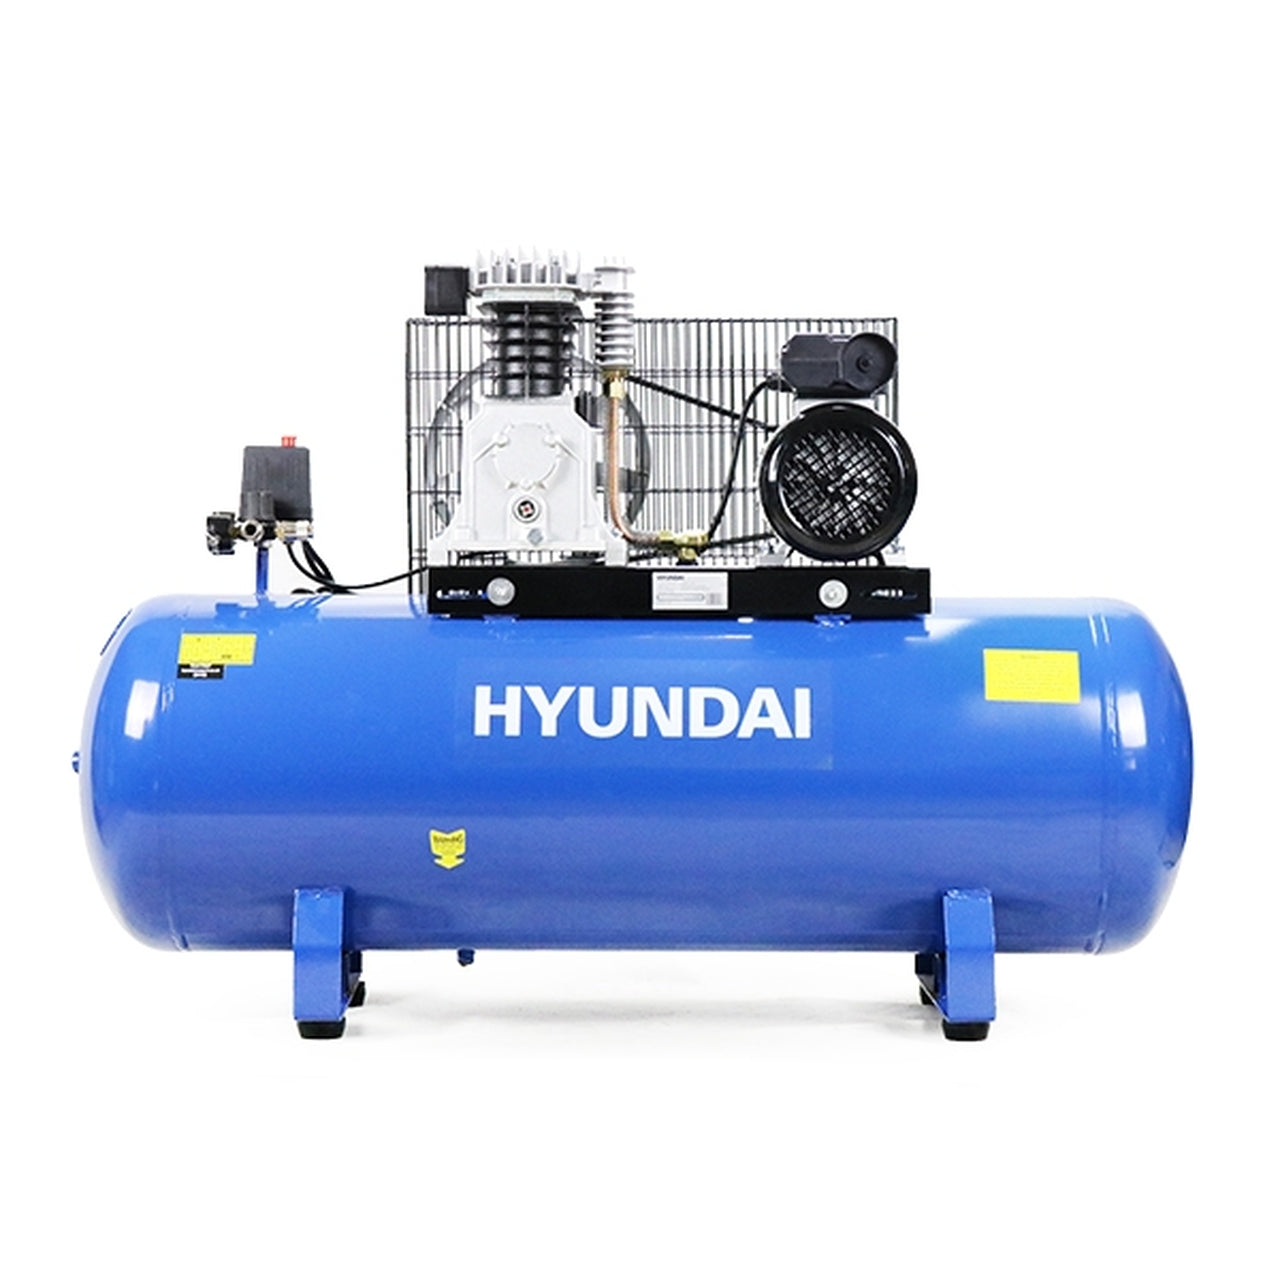 Hyundai-HY3150S-150-Litre-Belt-Drive-Air-Compressor,-14CFM/145psi,-Twin-Cylinder,-3hp